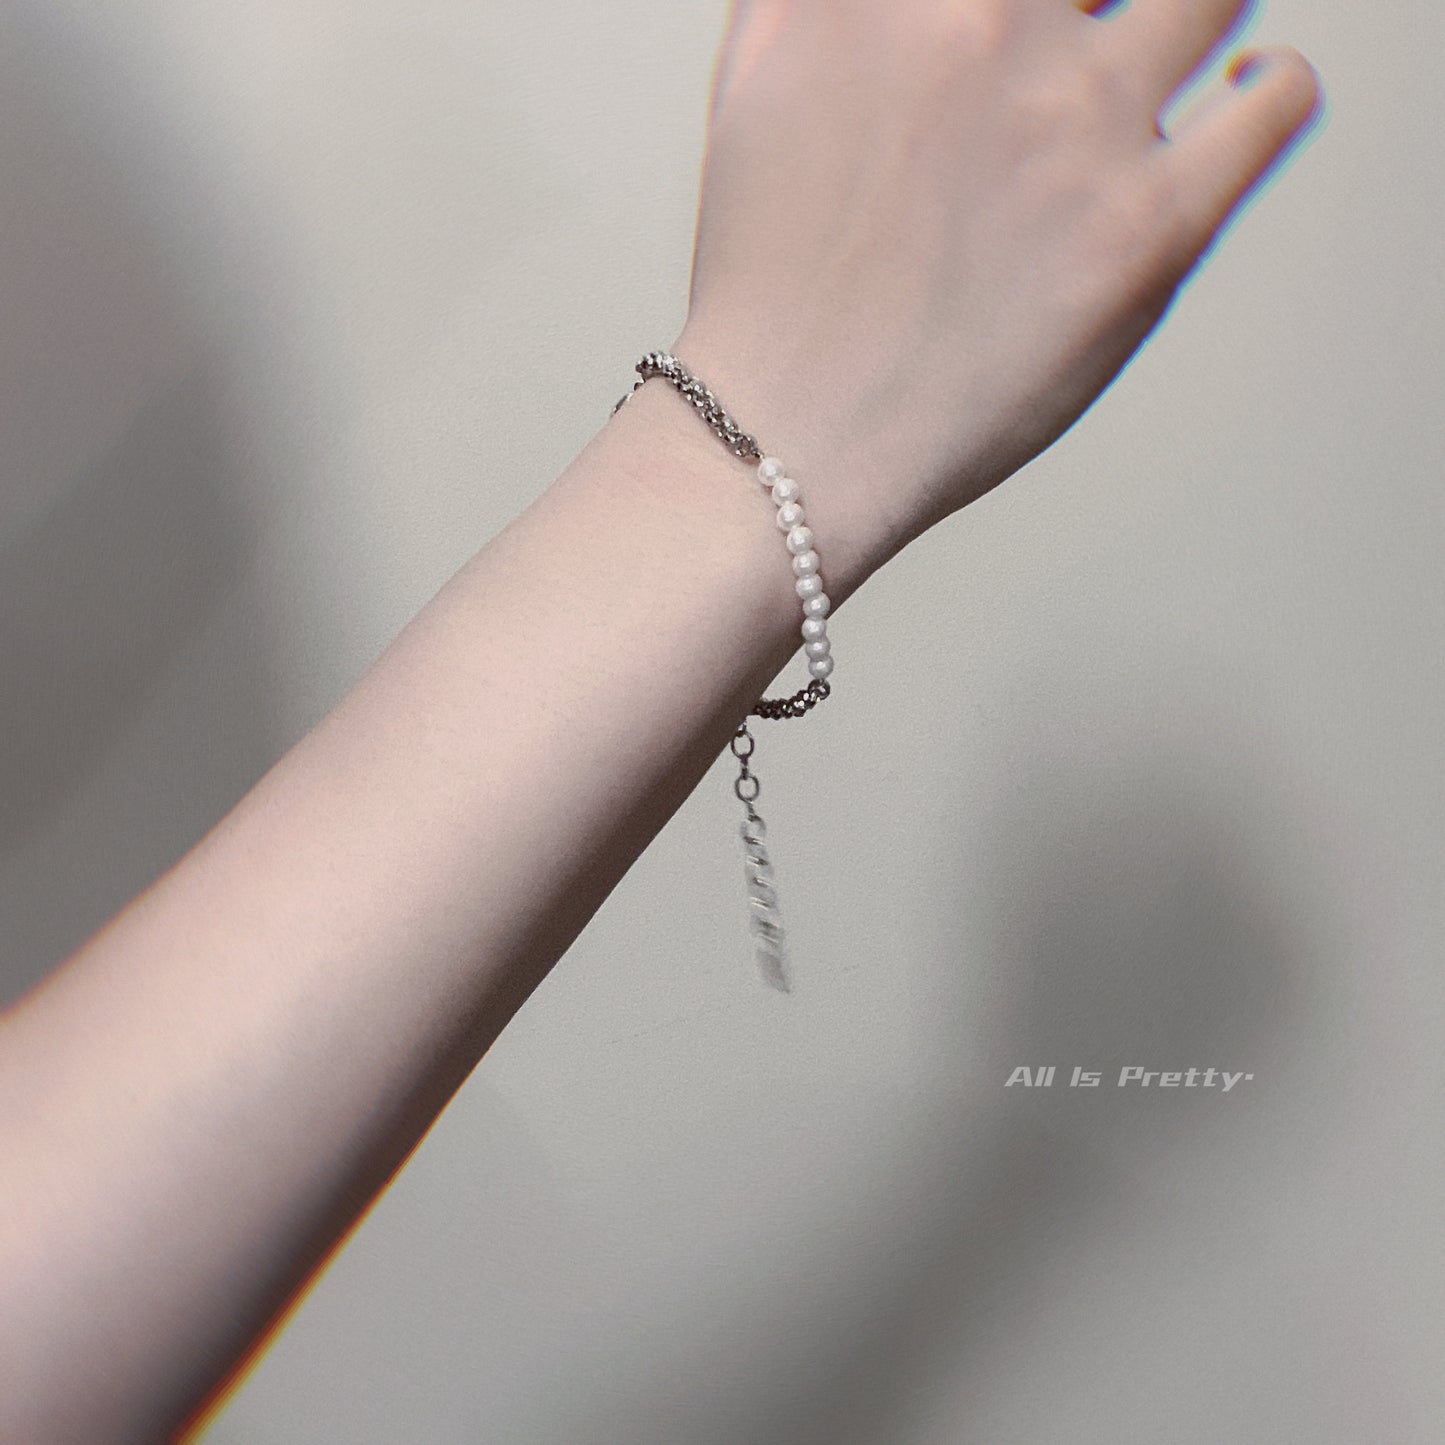 Linked chain pearl bracelet